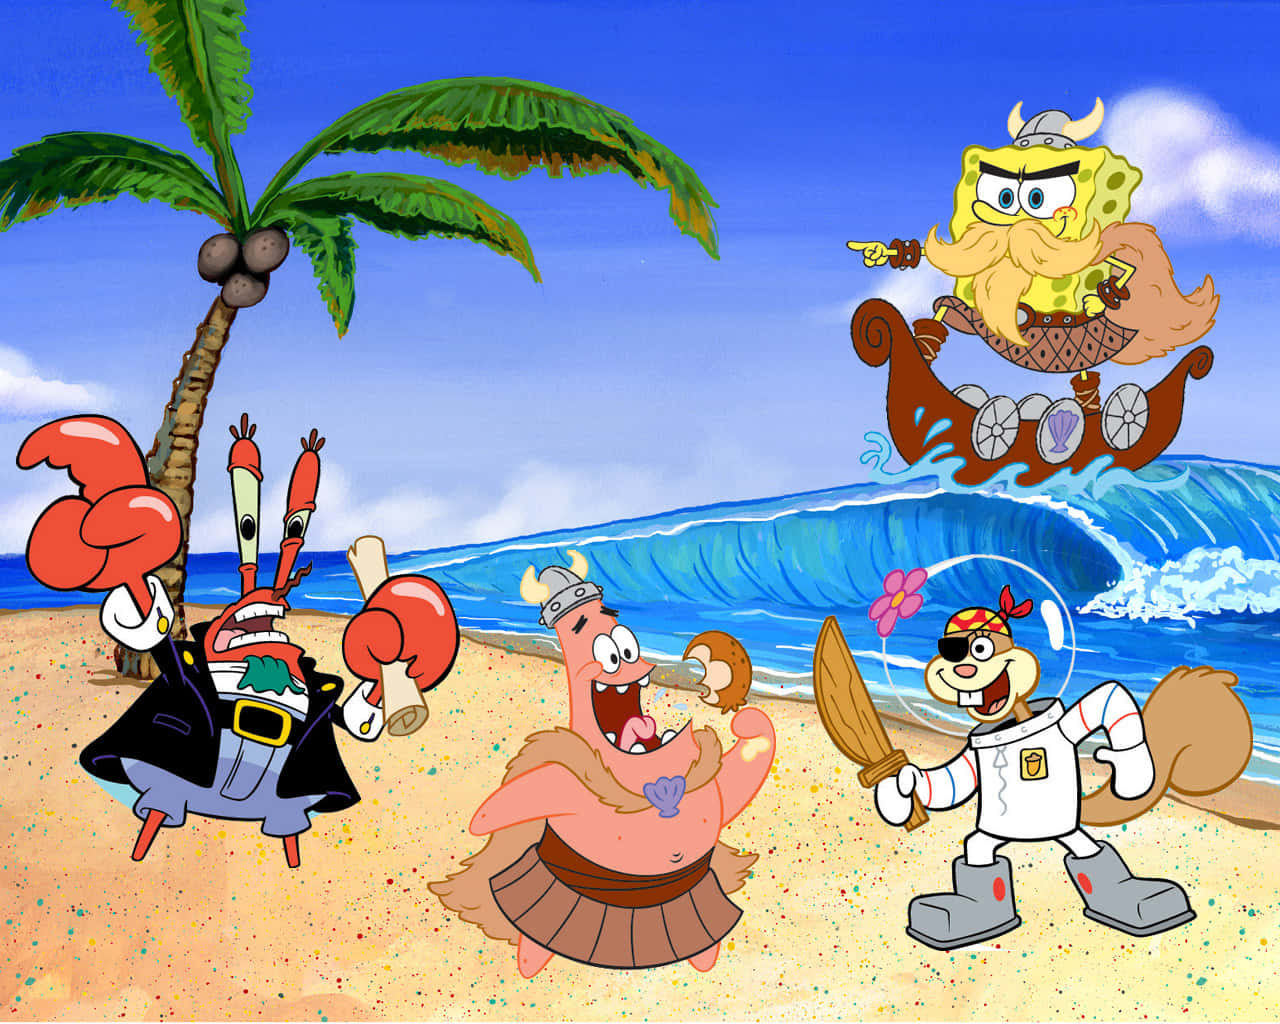 Join the fun with Spongebob Squarepants!